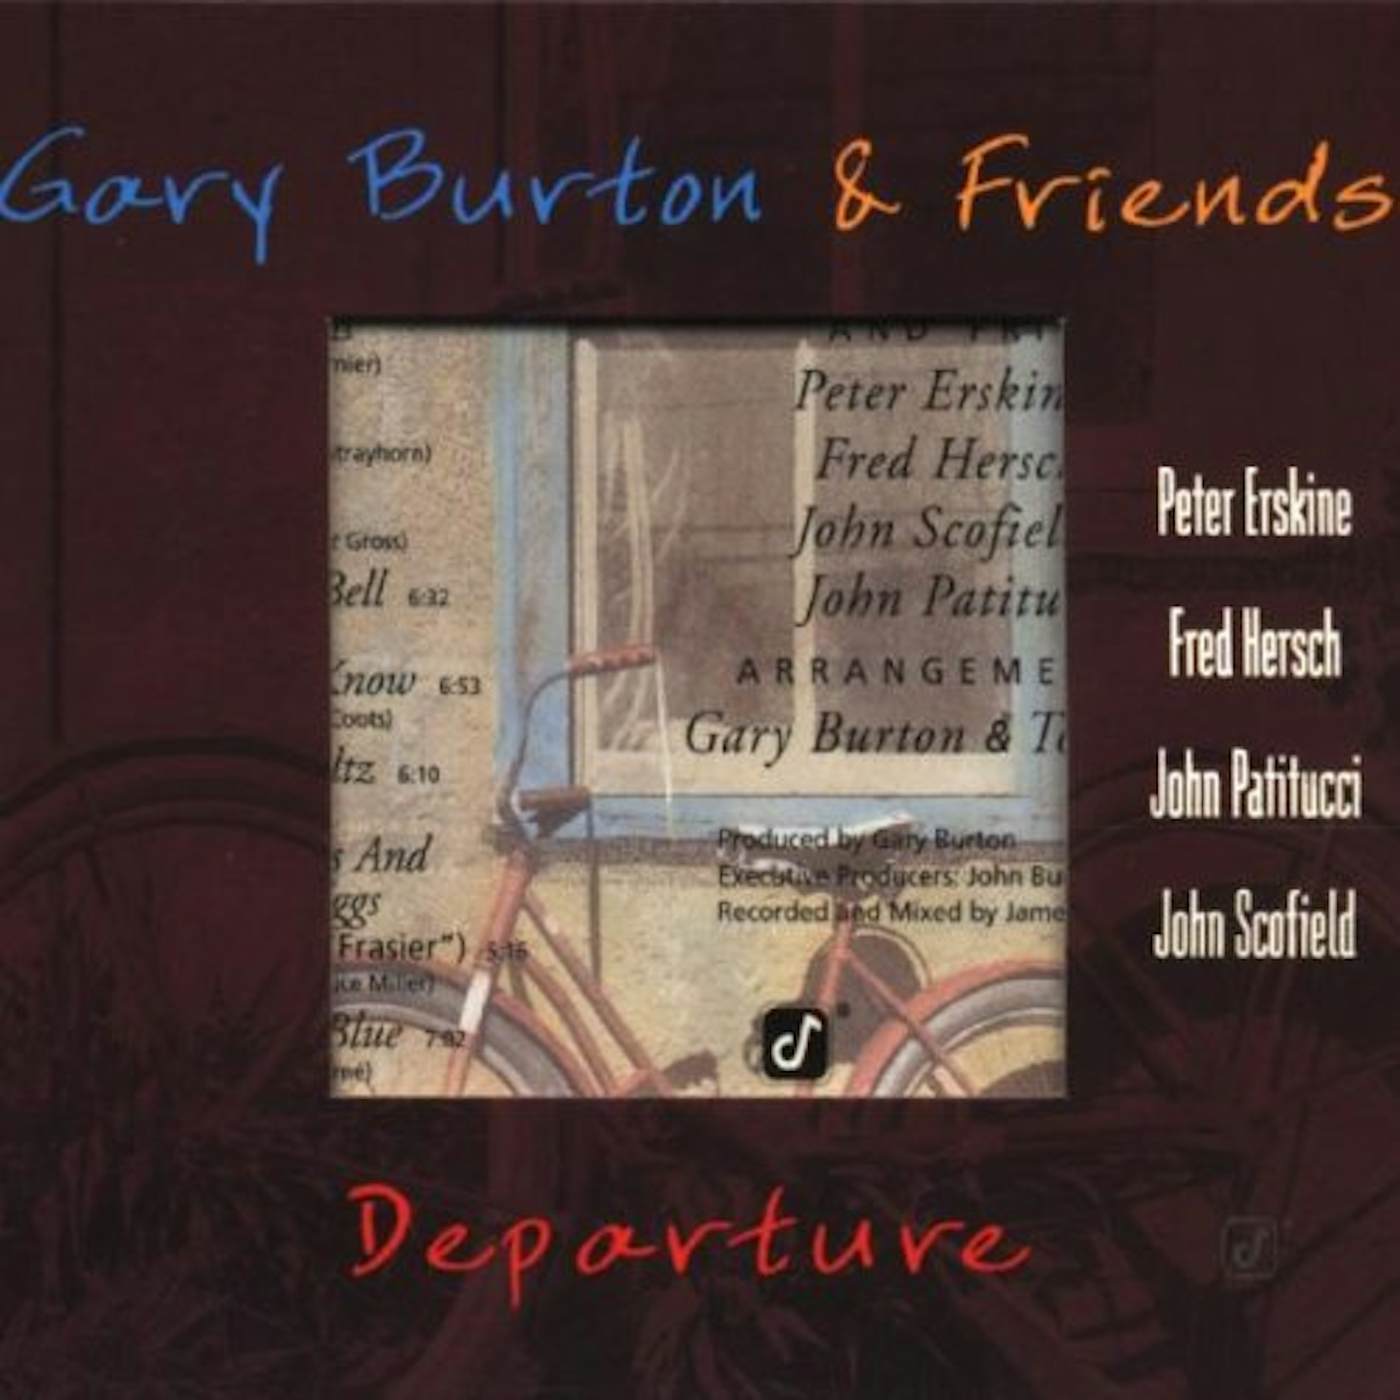 Gary Burton DEPARTURE CD